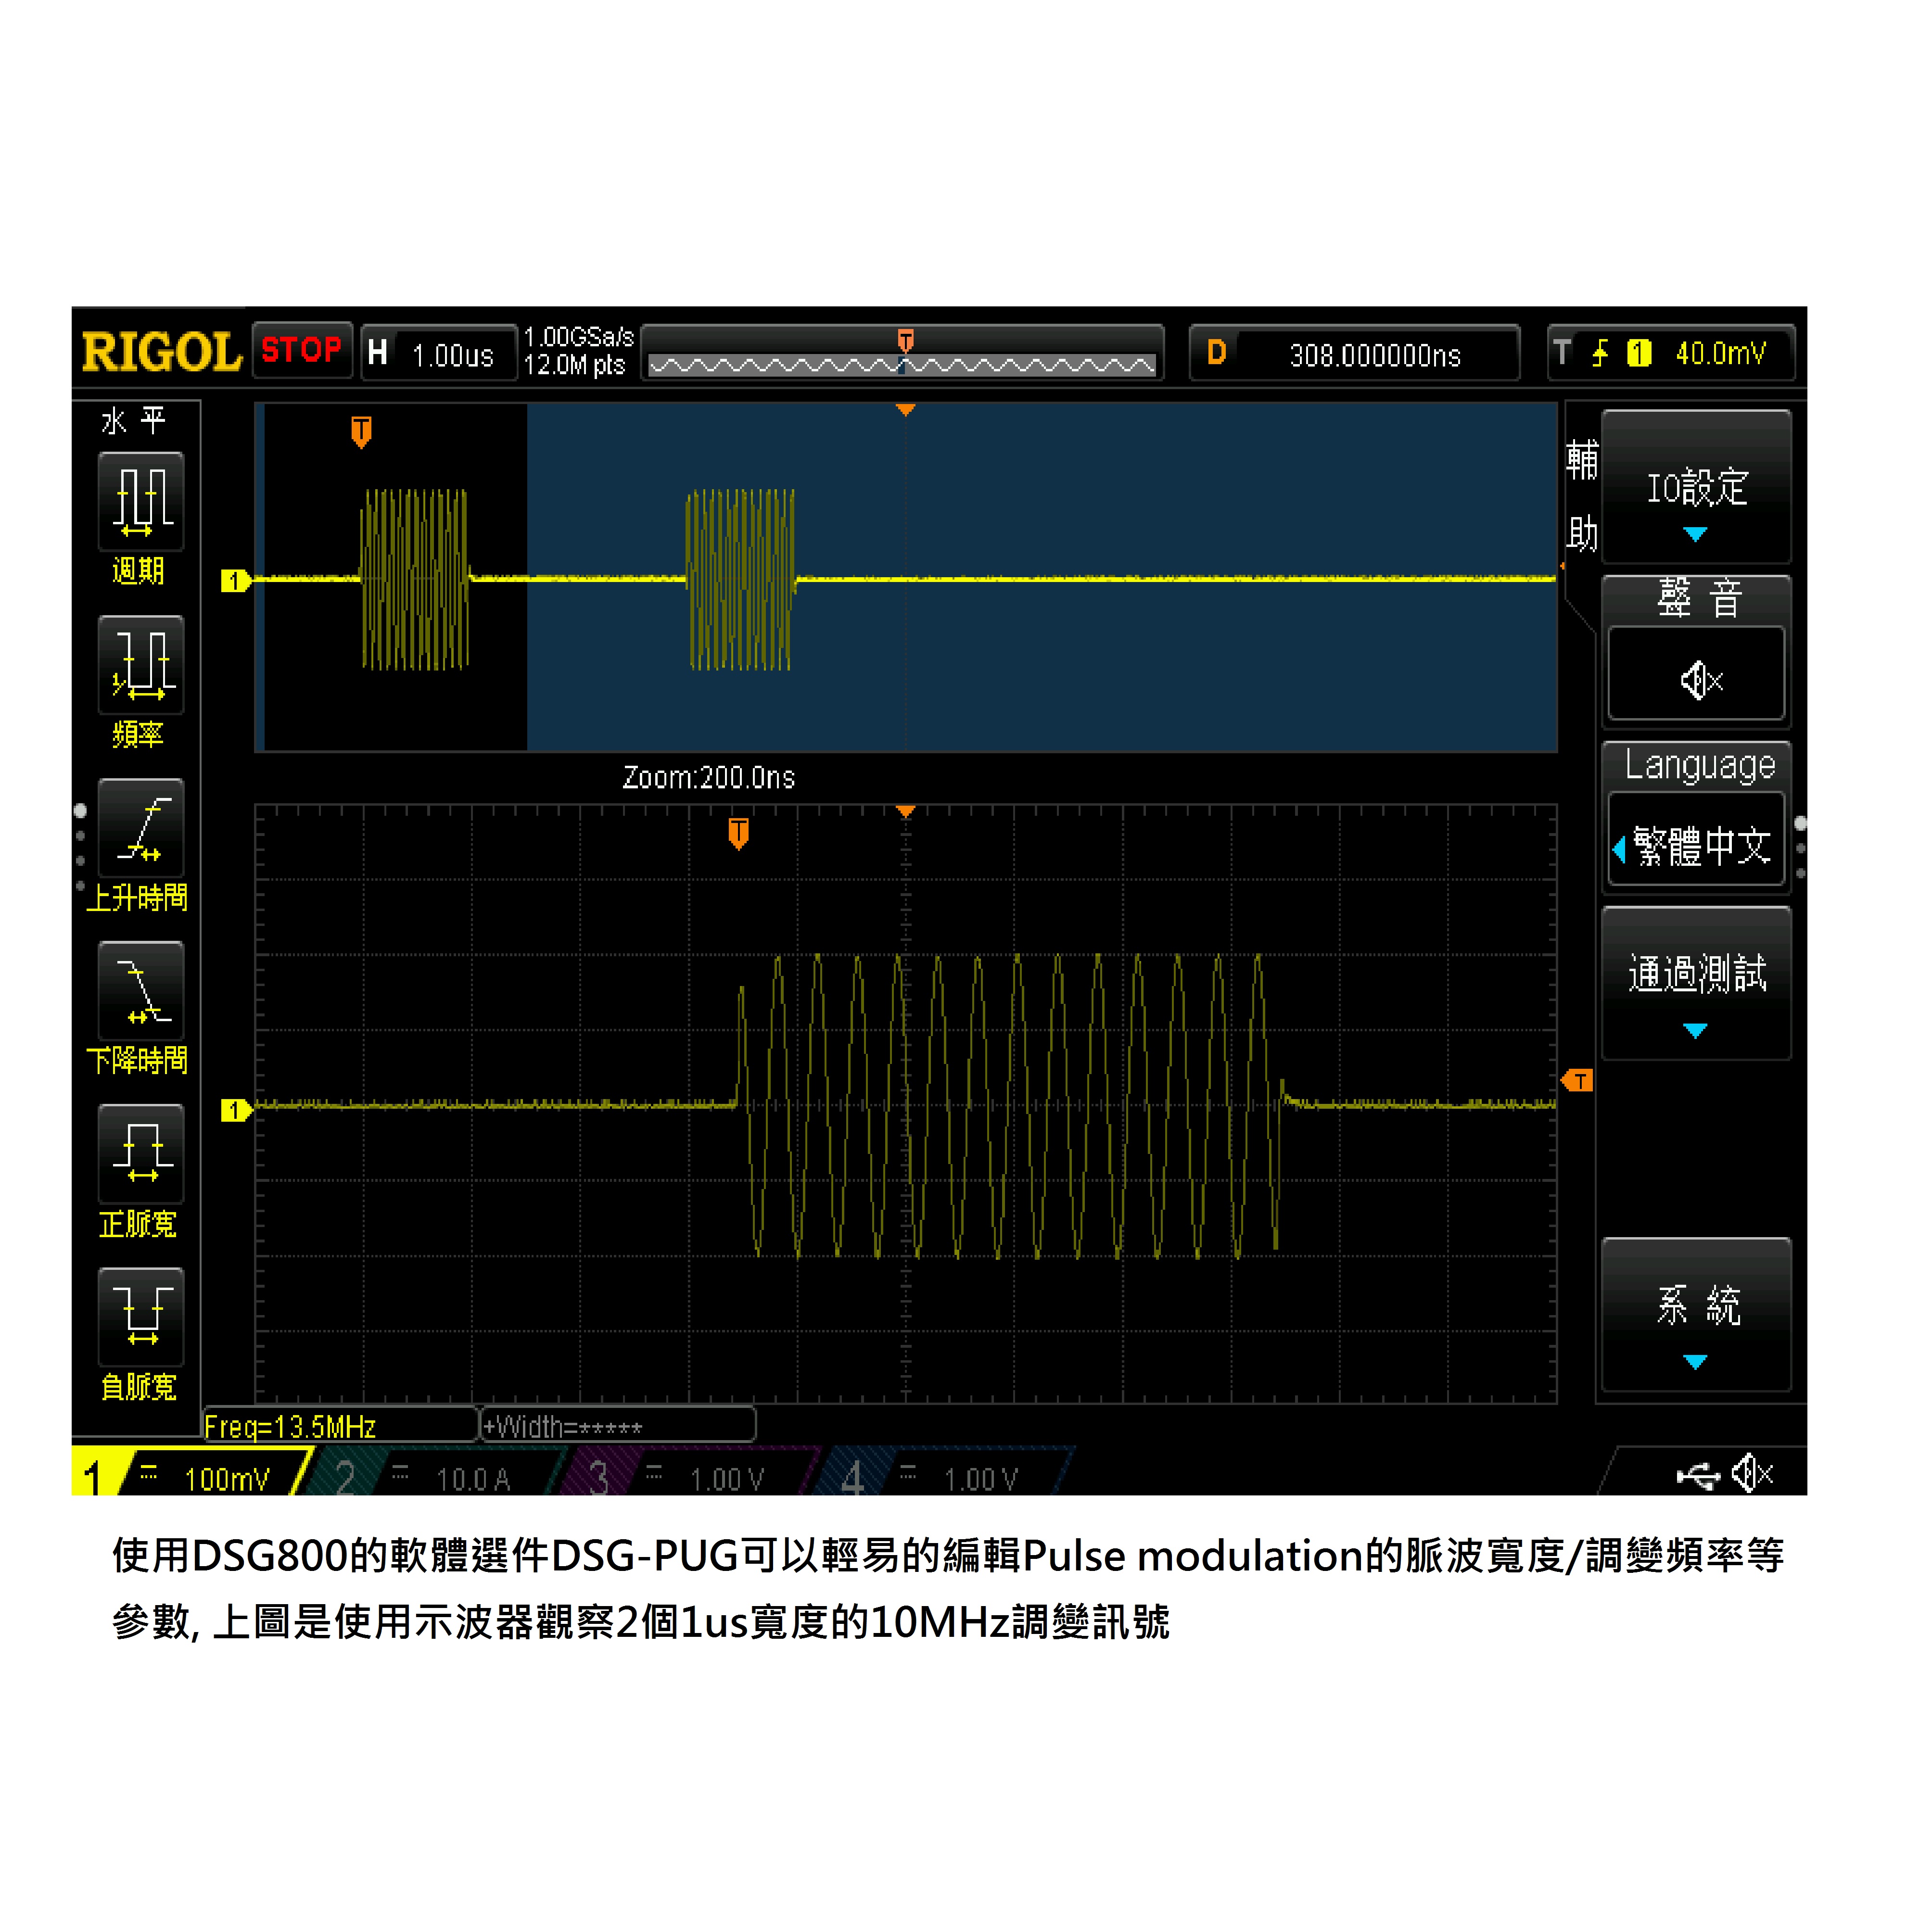 DSG800系列選配脈波寬度調變功能